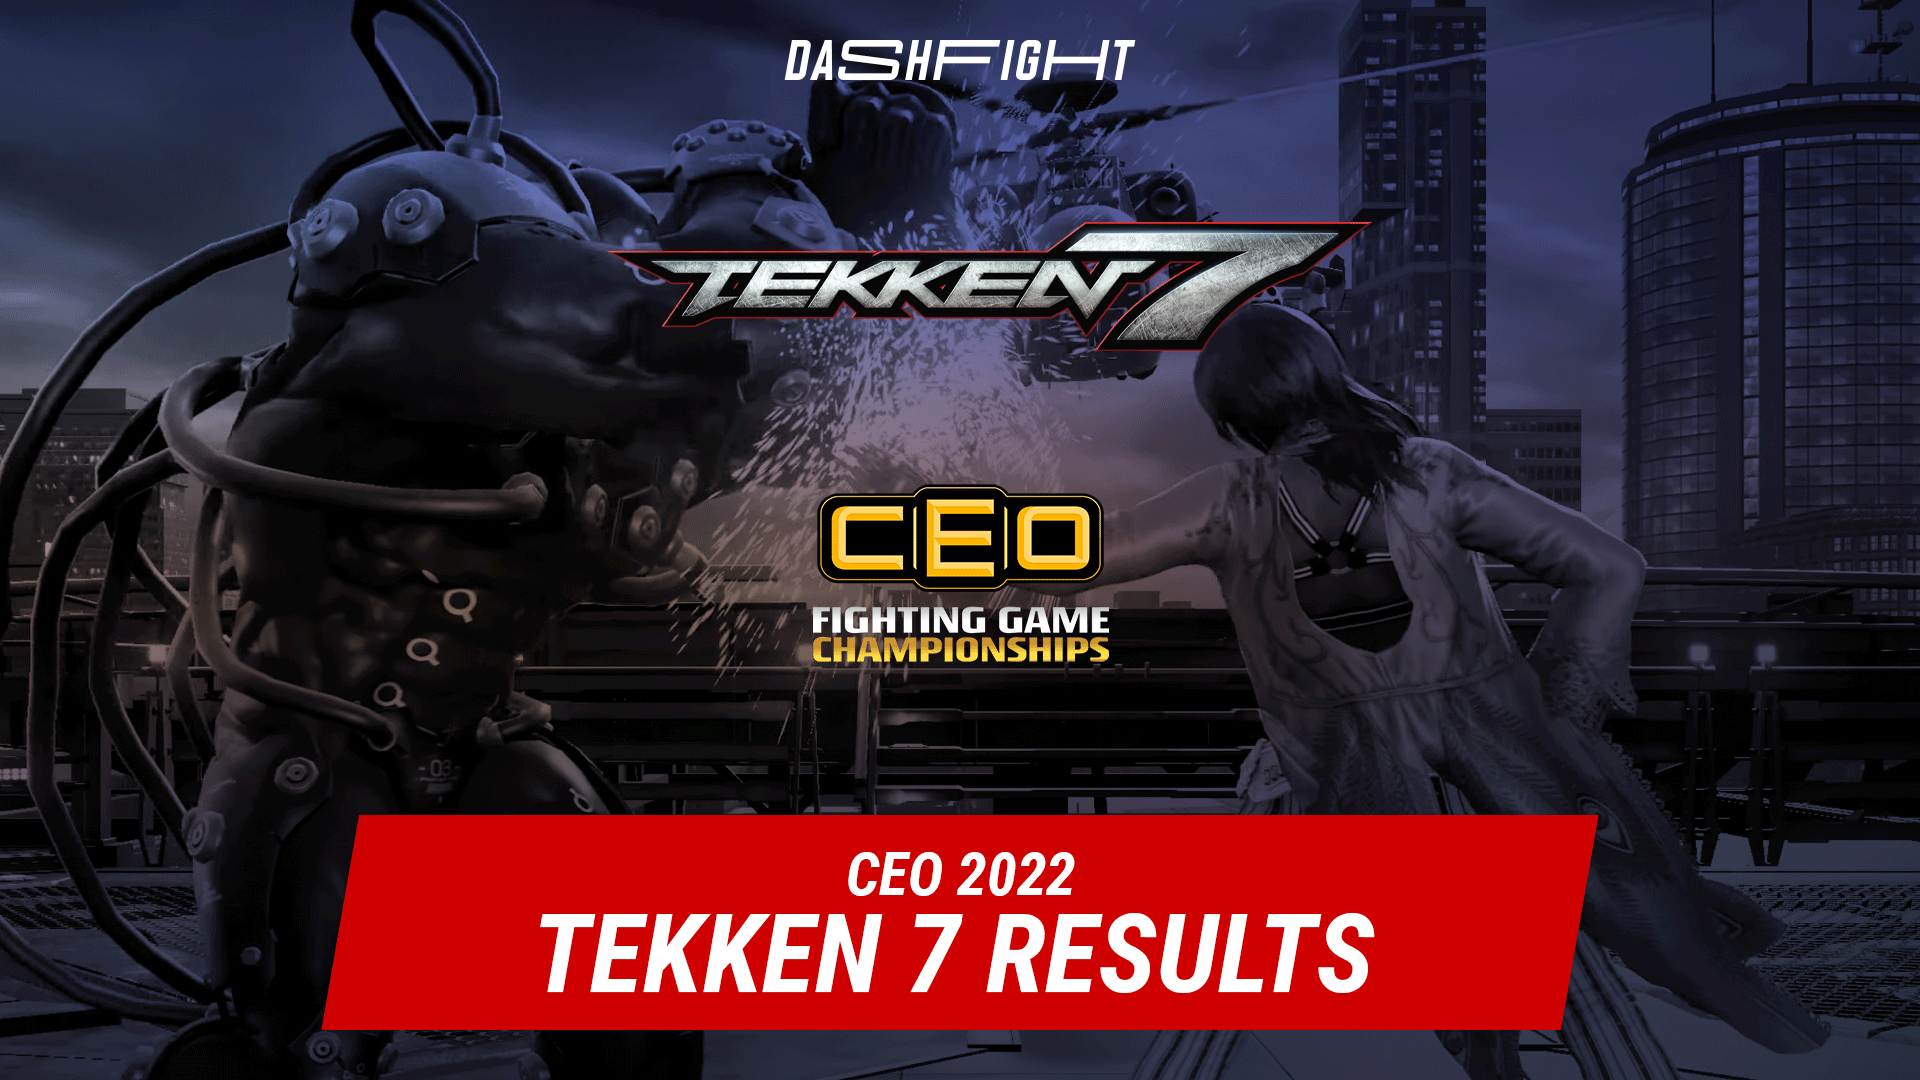 Tekken 7 at CEO 2022: Another brilliant show in the Tekken World Tour